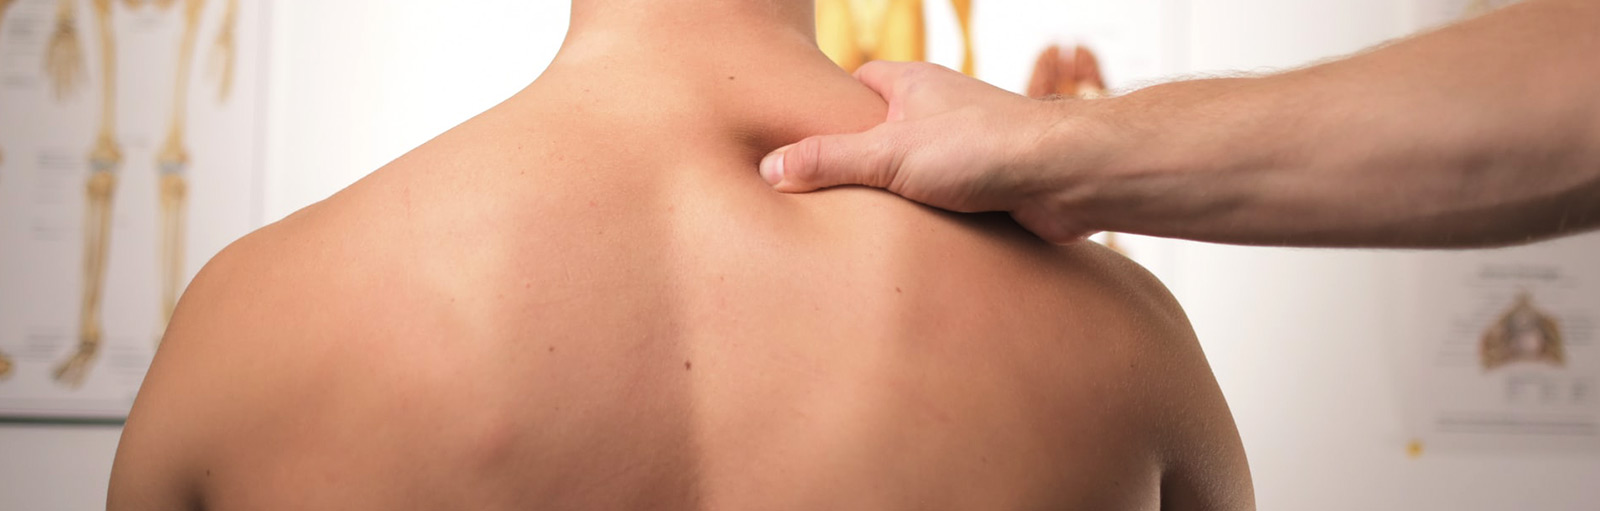 Krafttraining bei Rückenschmerzen Bandscheibenvorfall Bandscheibenoperation